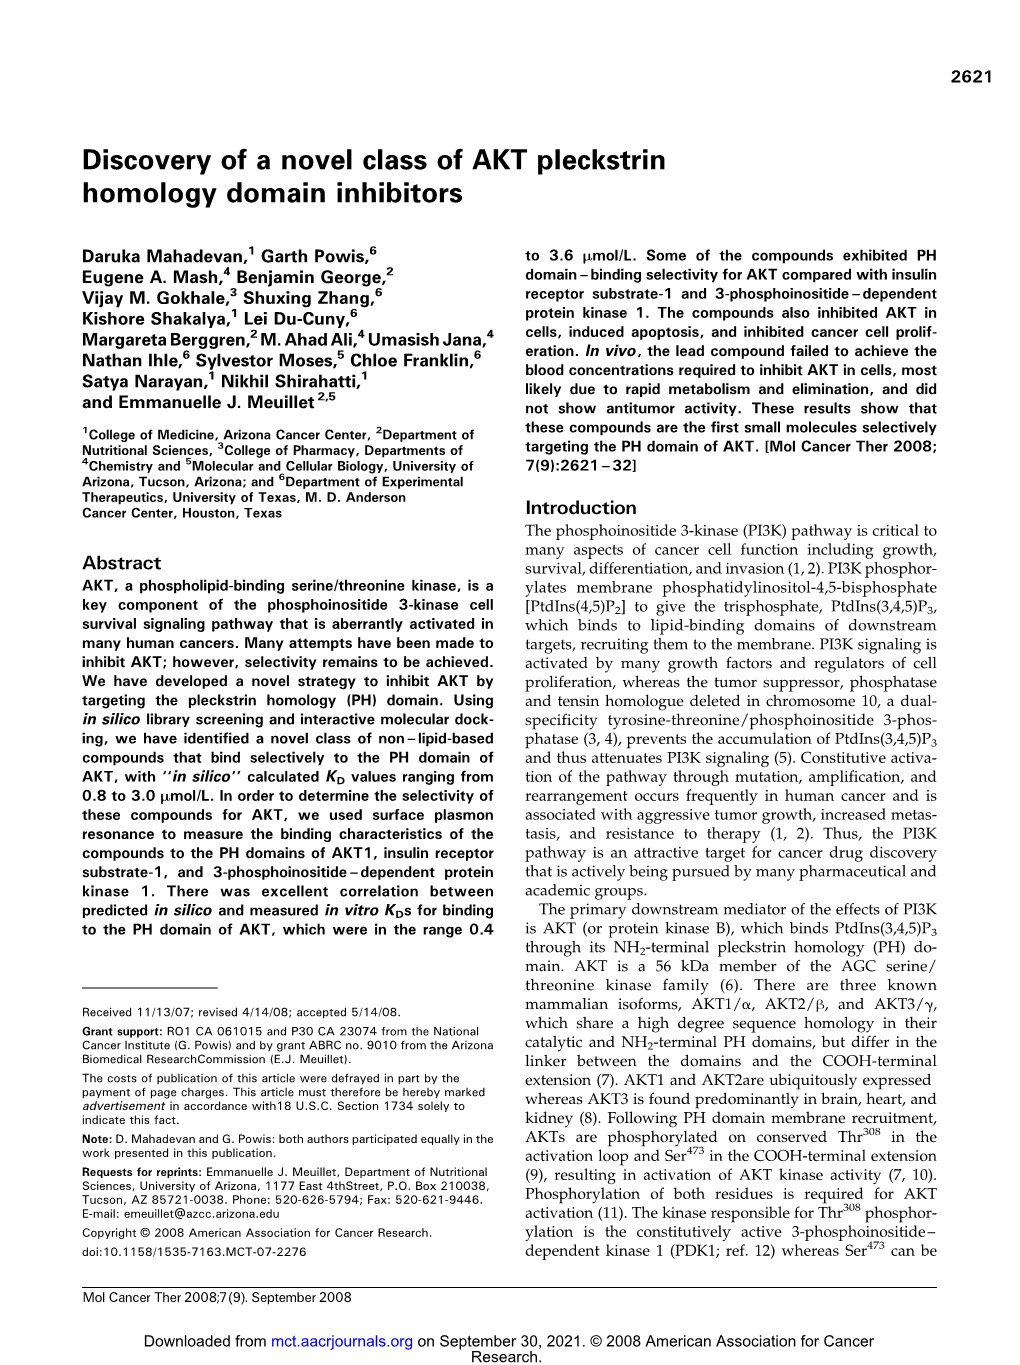 Discovery of a Novel Class of AKT Pleckstrin Homology Domain Inhibitors